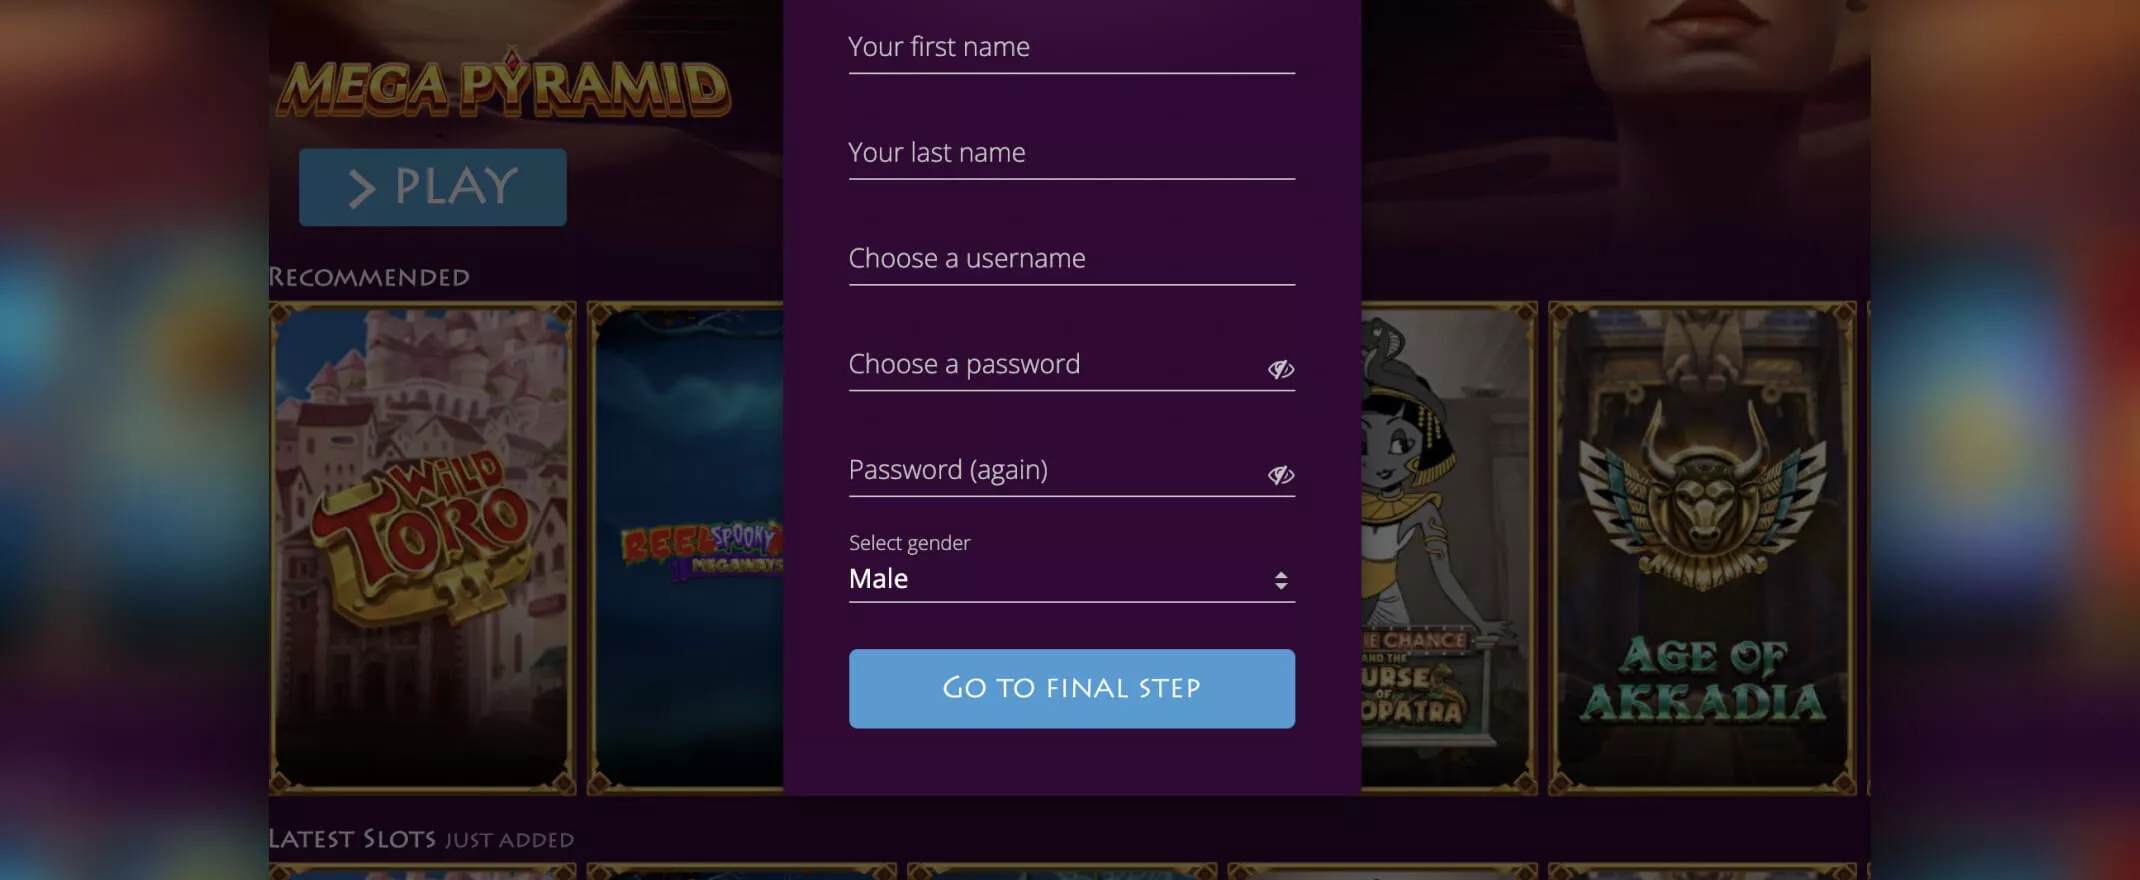 Casino Nile registration screenshot